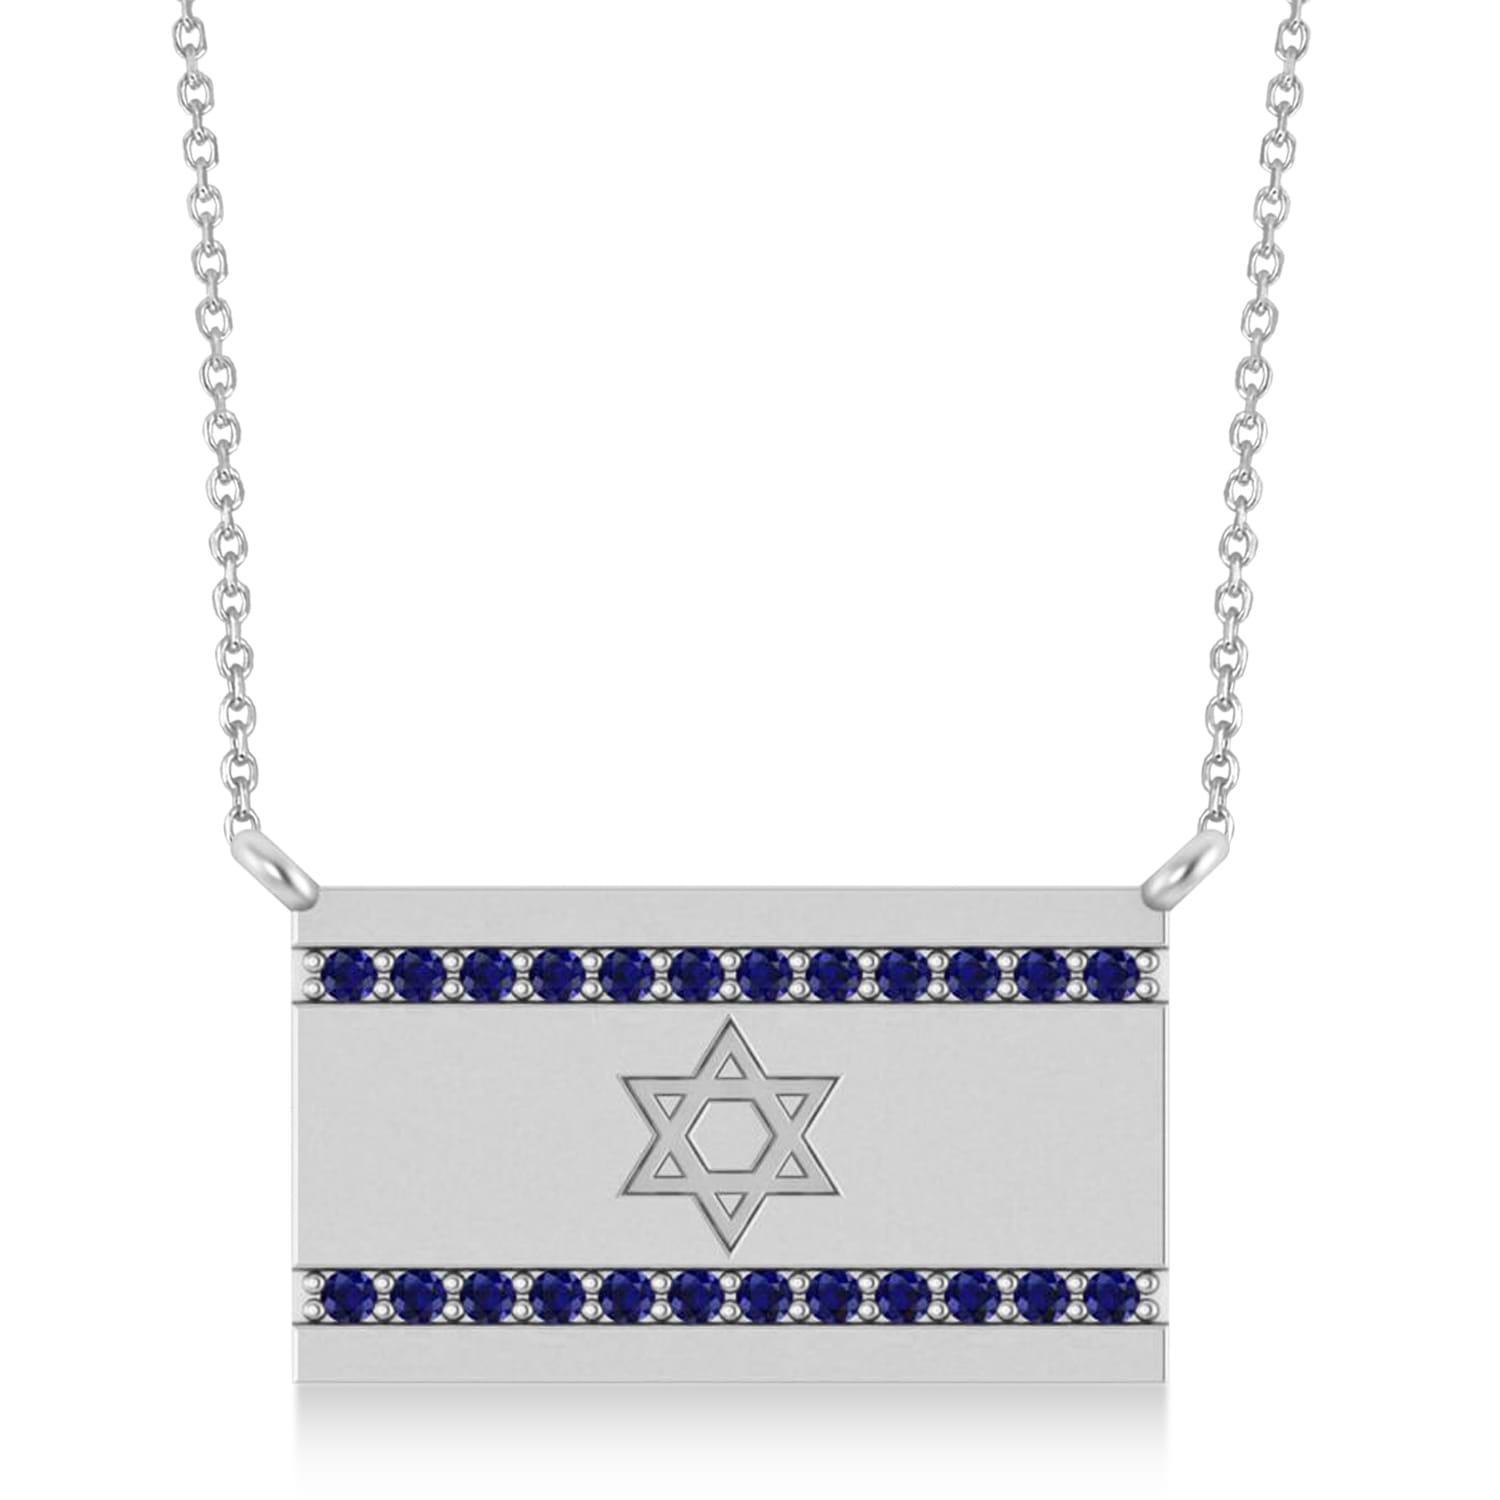 Israel Flag Necklace